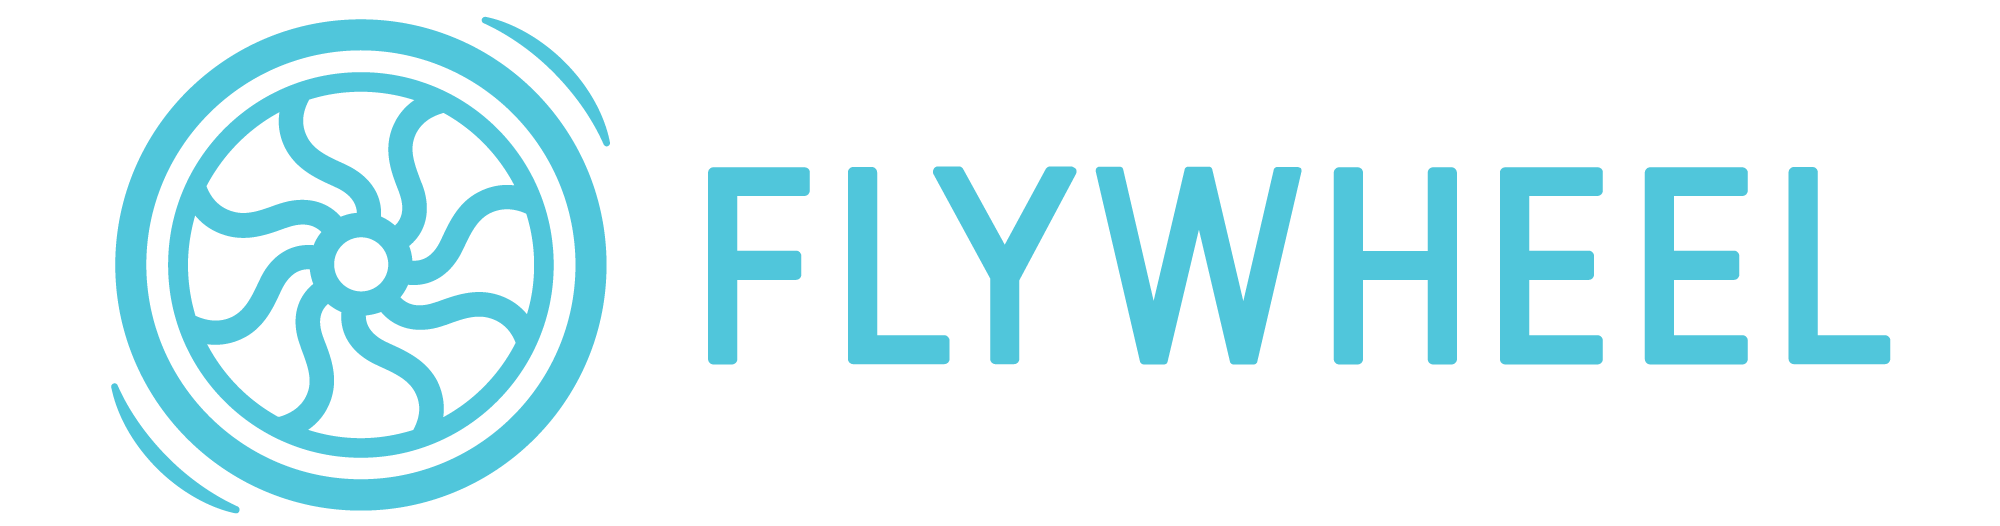 Flywheel Black Friday Deal Logo